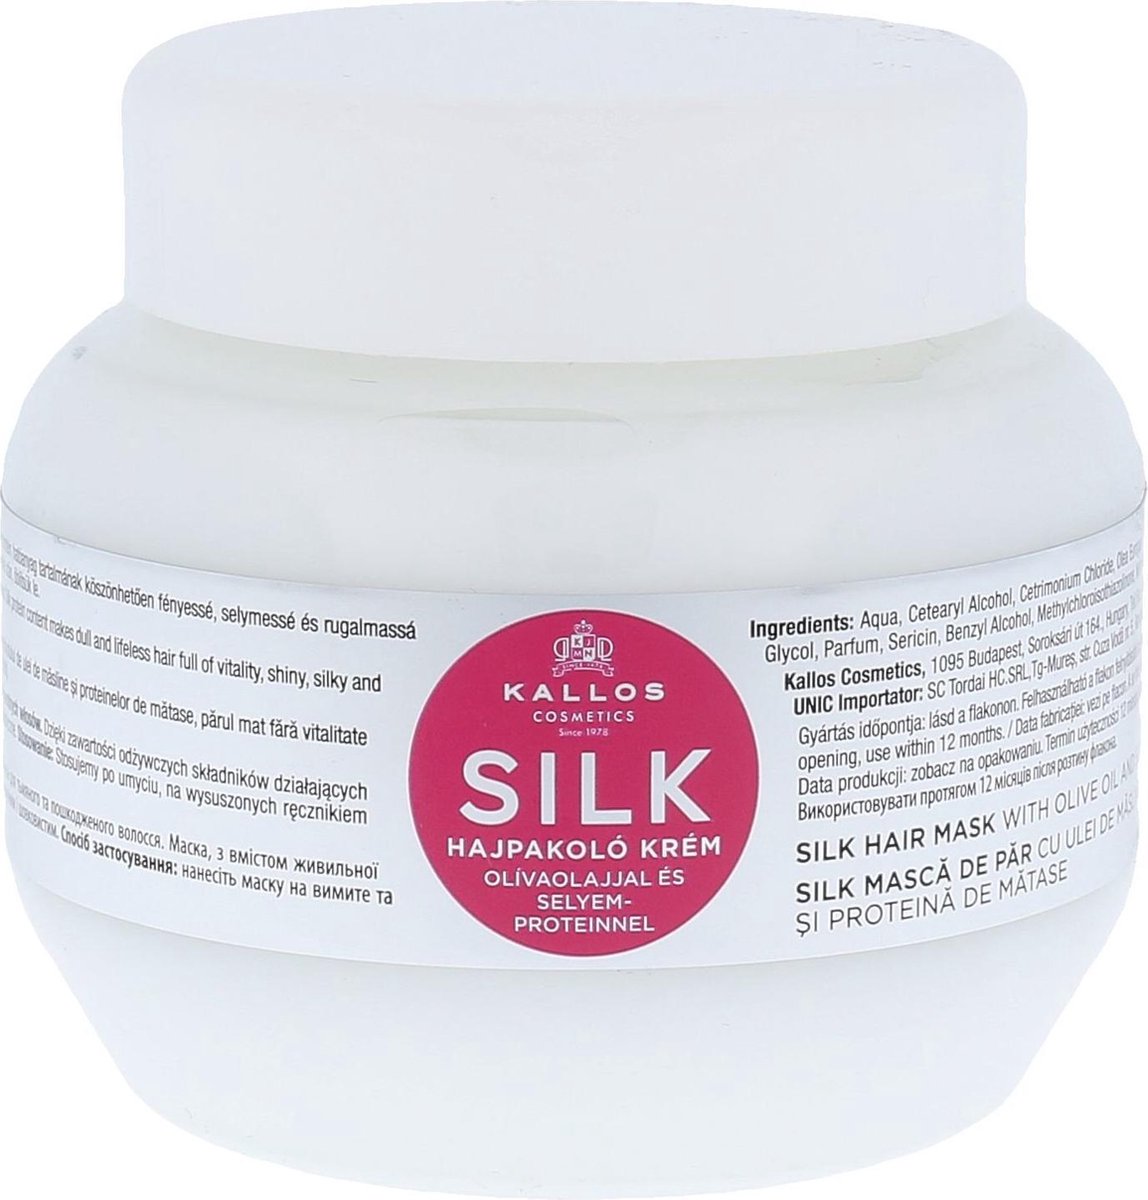 Kallos - KJMN Silk Hair Mask with Olive Oil and Silk Protein - 275ml